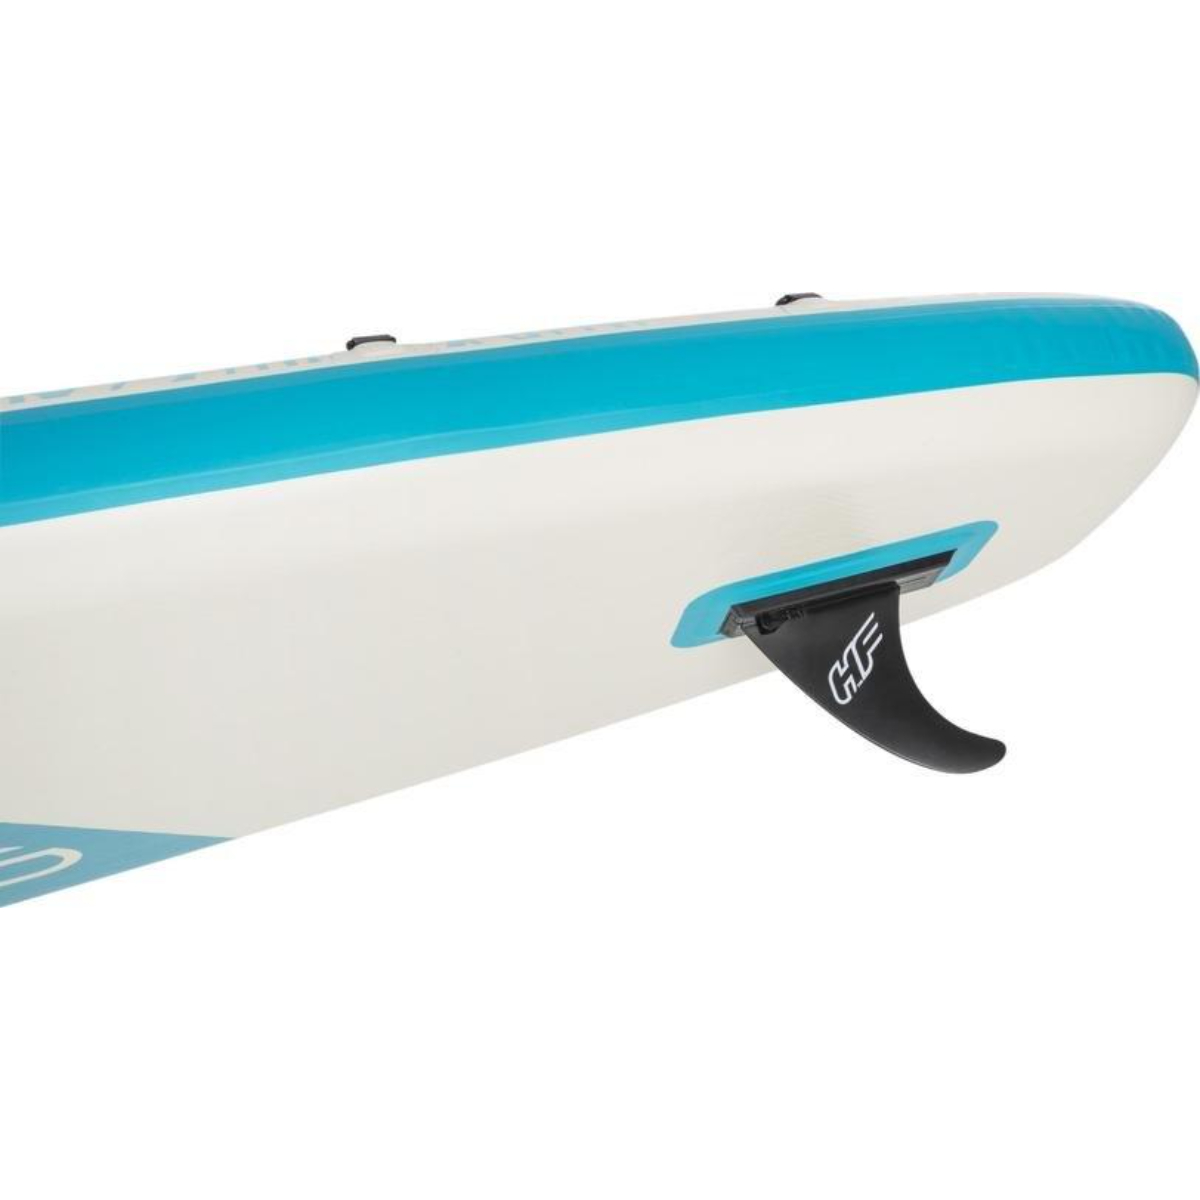 BESTWAY Hydro-Force Sup board, White